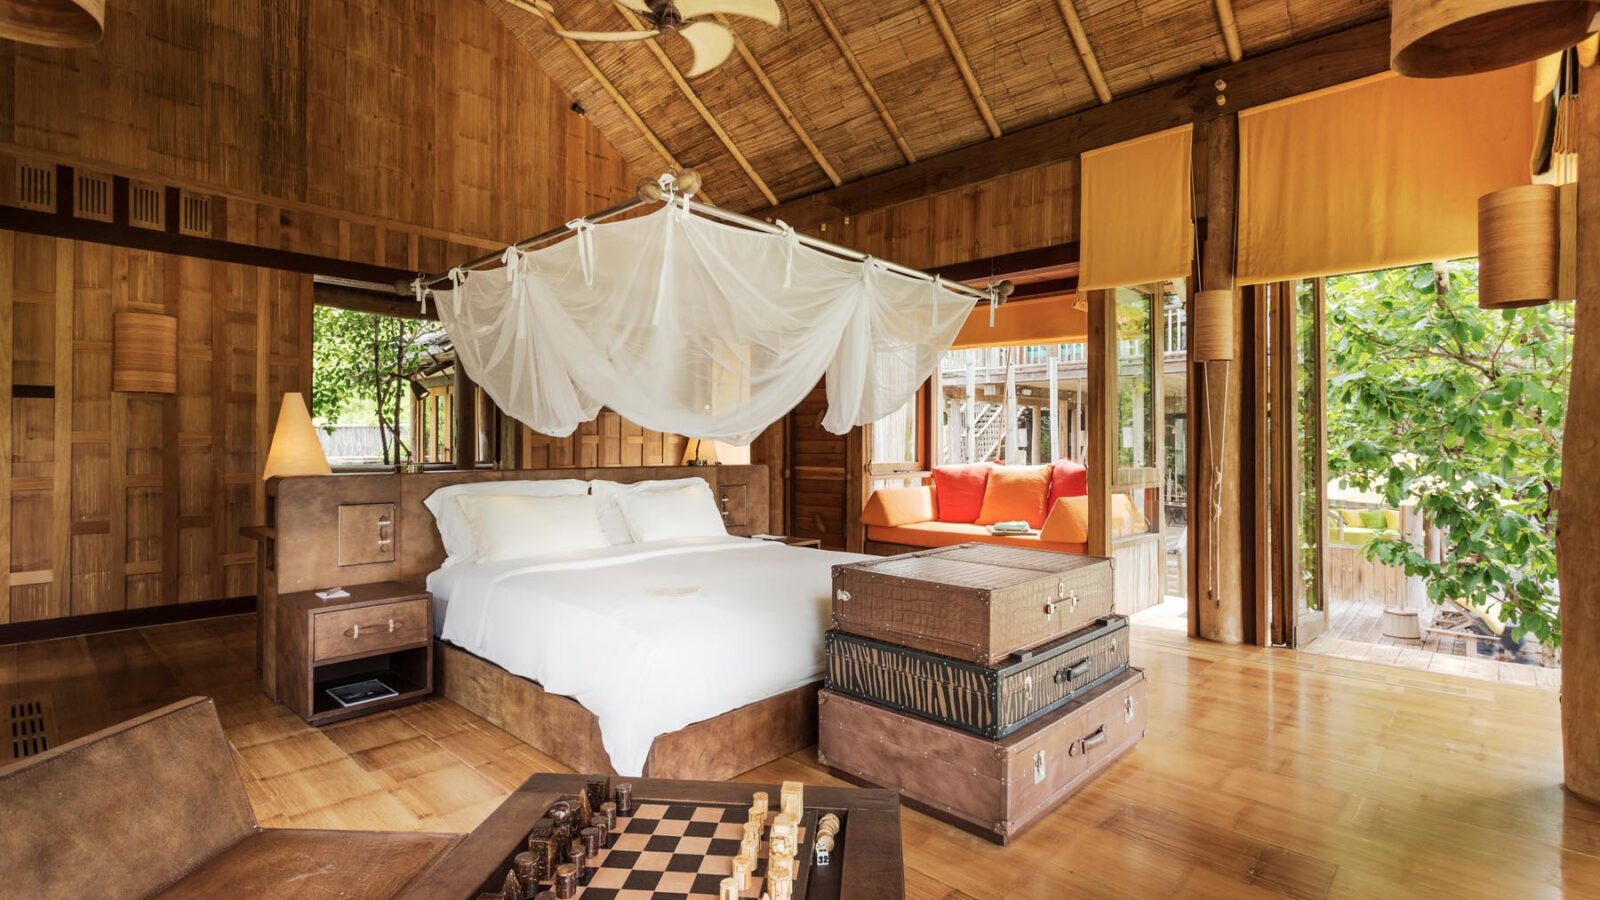 Luxury Villas in Thailand, 5 Bedroom Bayview Pool Reserve at Soneva Kiri, Master Bedroom